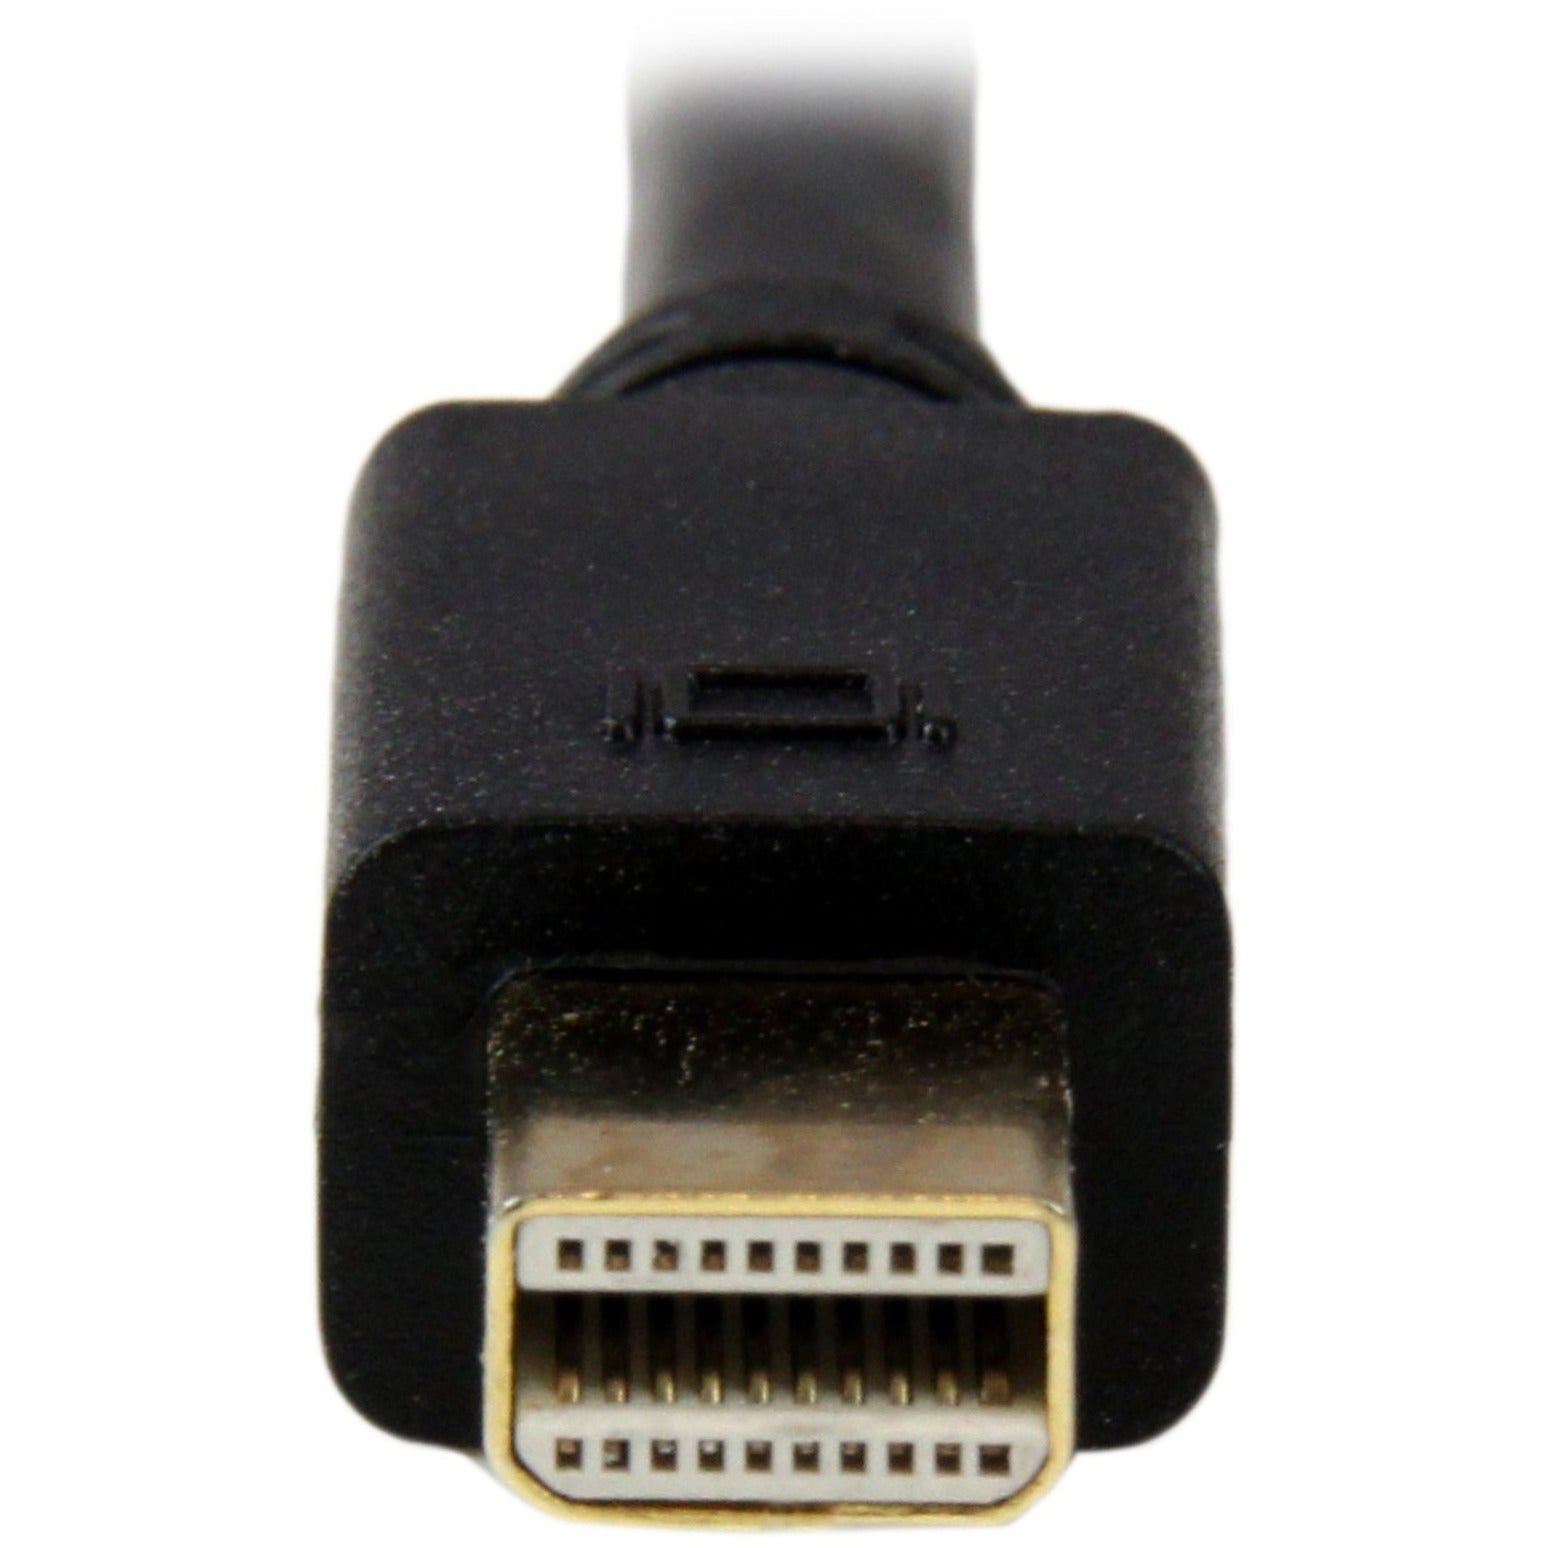 StarTech.com MDP2VGAMM15B Mini DisplayPort to VGA Adapter Converter Cable - Black, 15 ft, 1920x1200